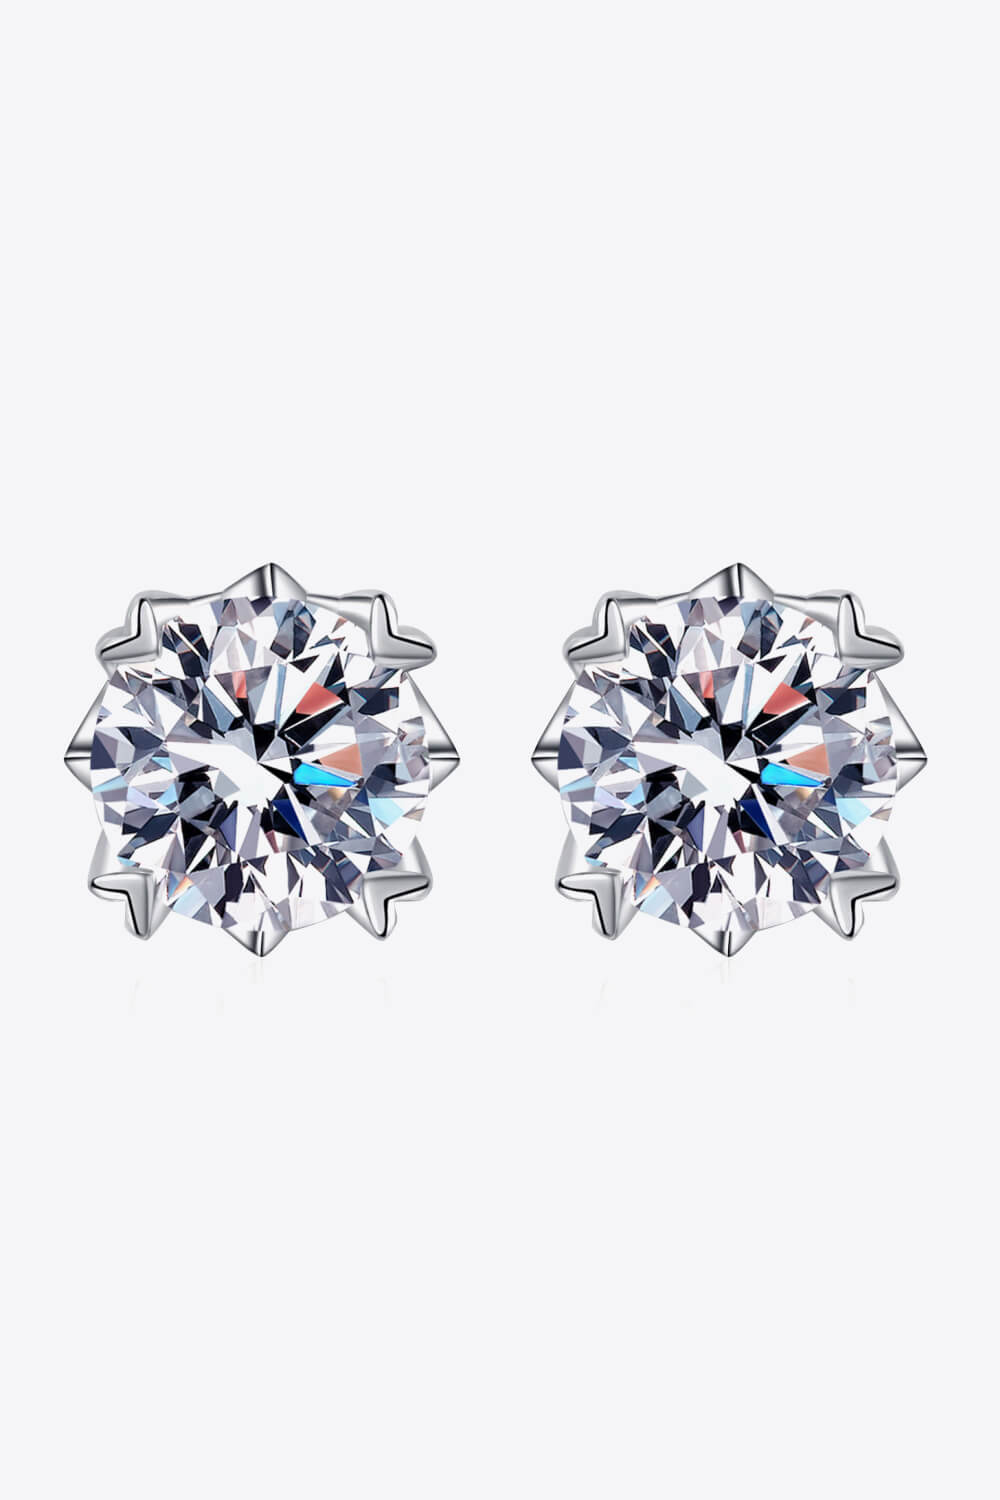 925 Sterling Silver 4 Carat Moissanite Stud Earrings - Tophatter Shopping Deals